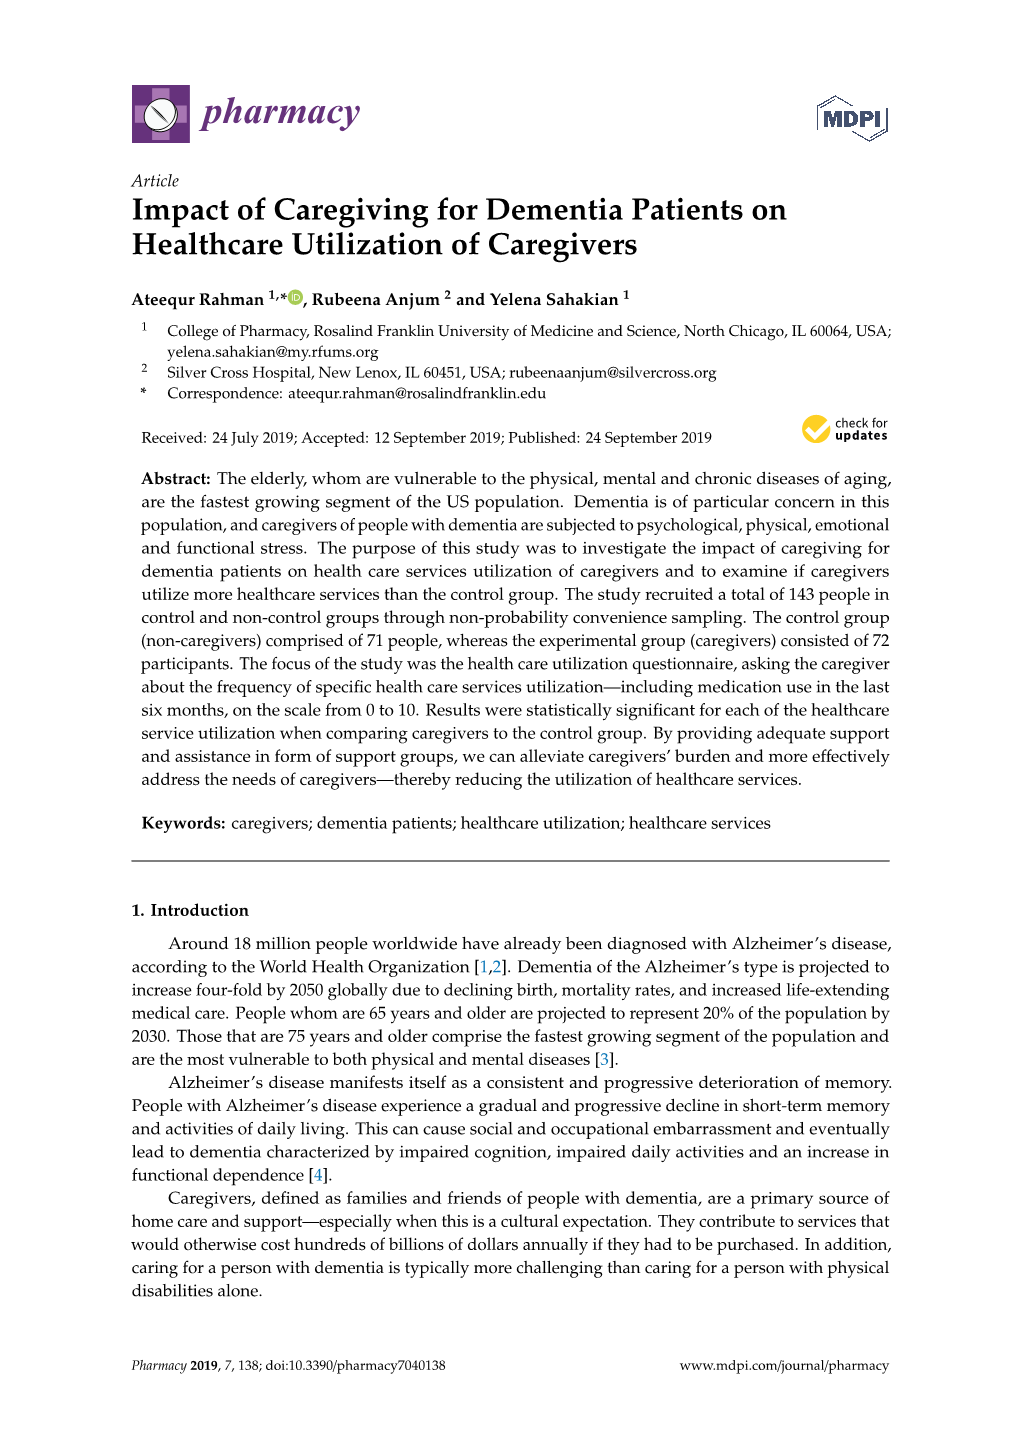 Impact of Caregiving for Dementia Patients on Healthcare Utilization of Caregivers